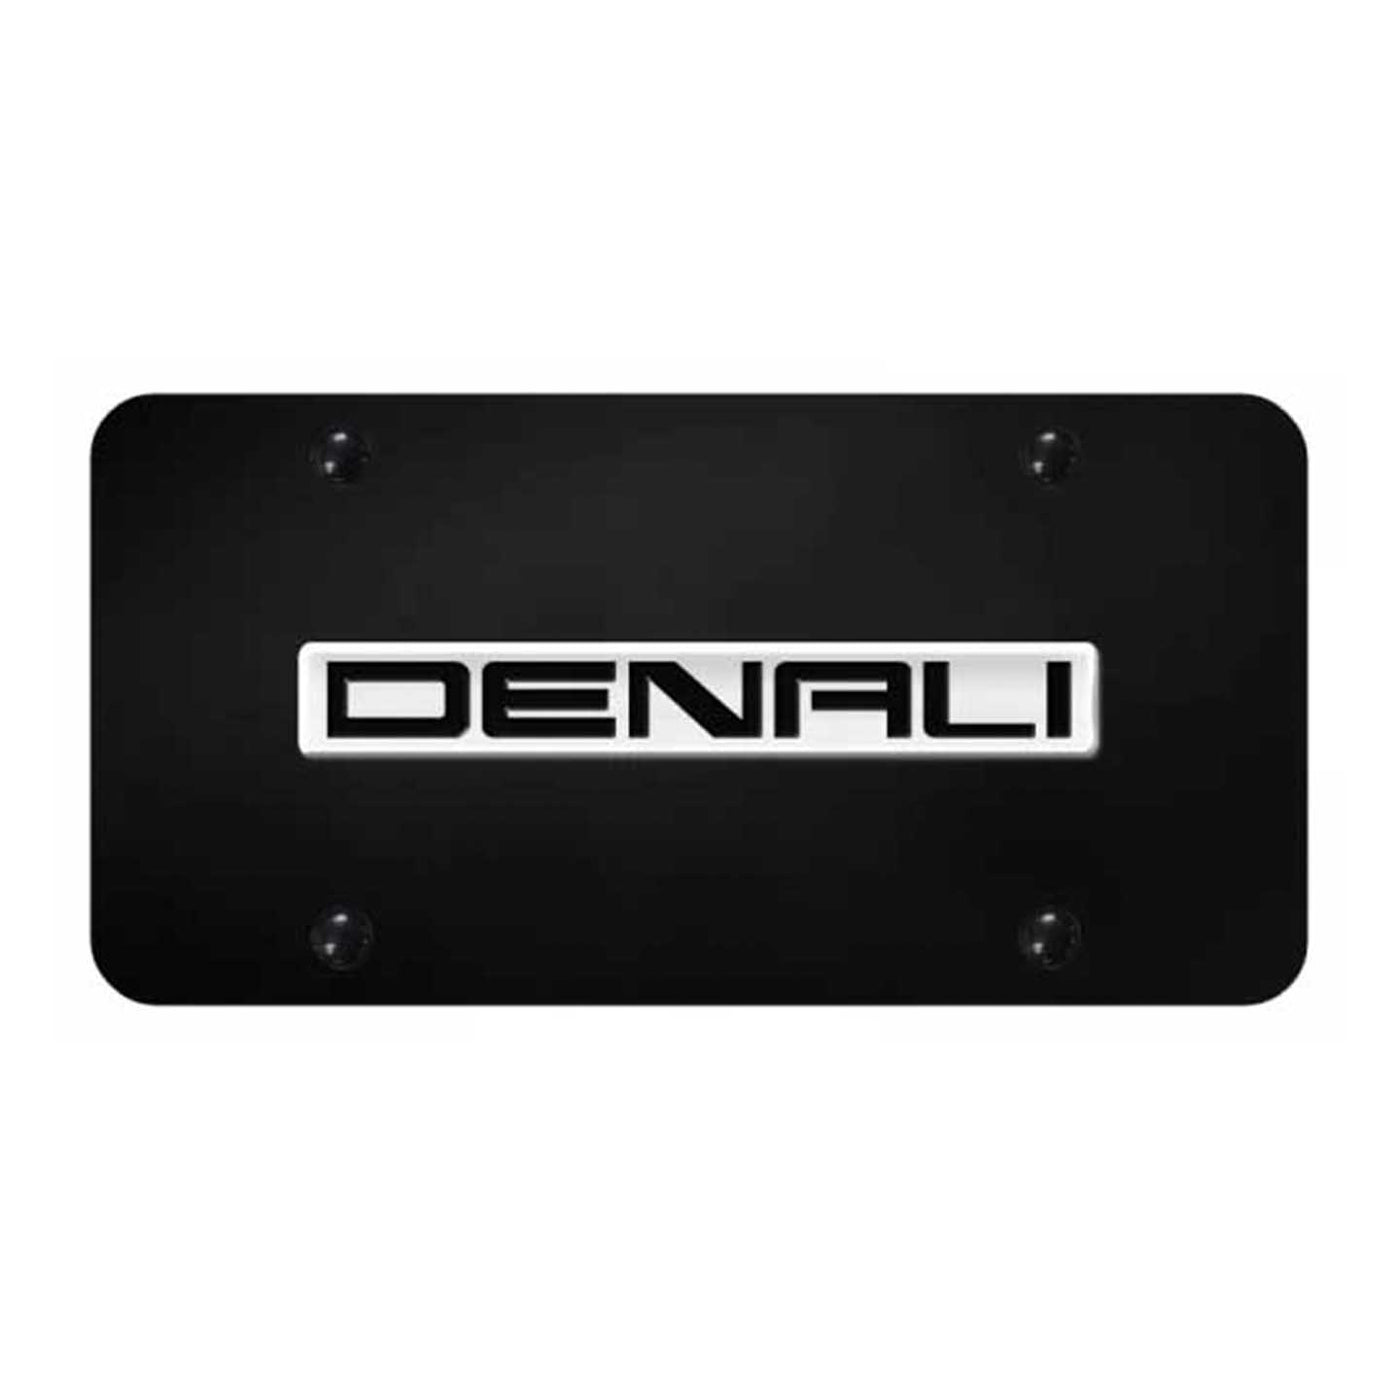 Denali Name License Plate - Chrome on Black